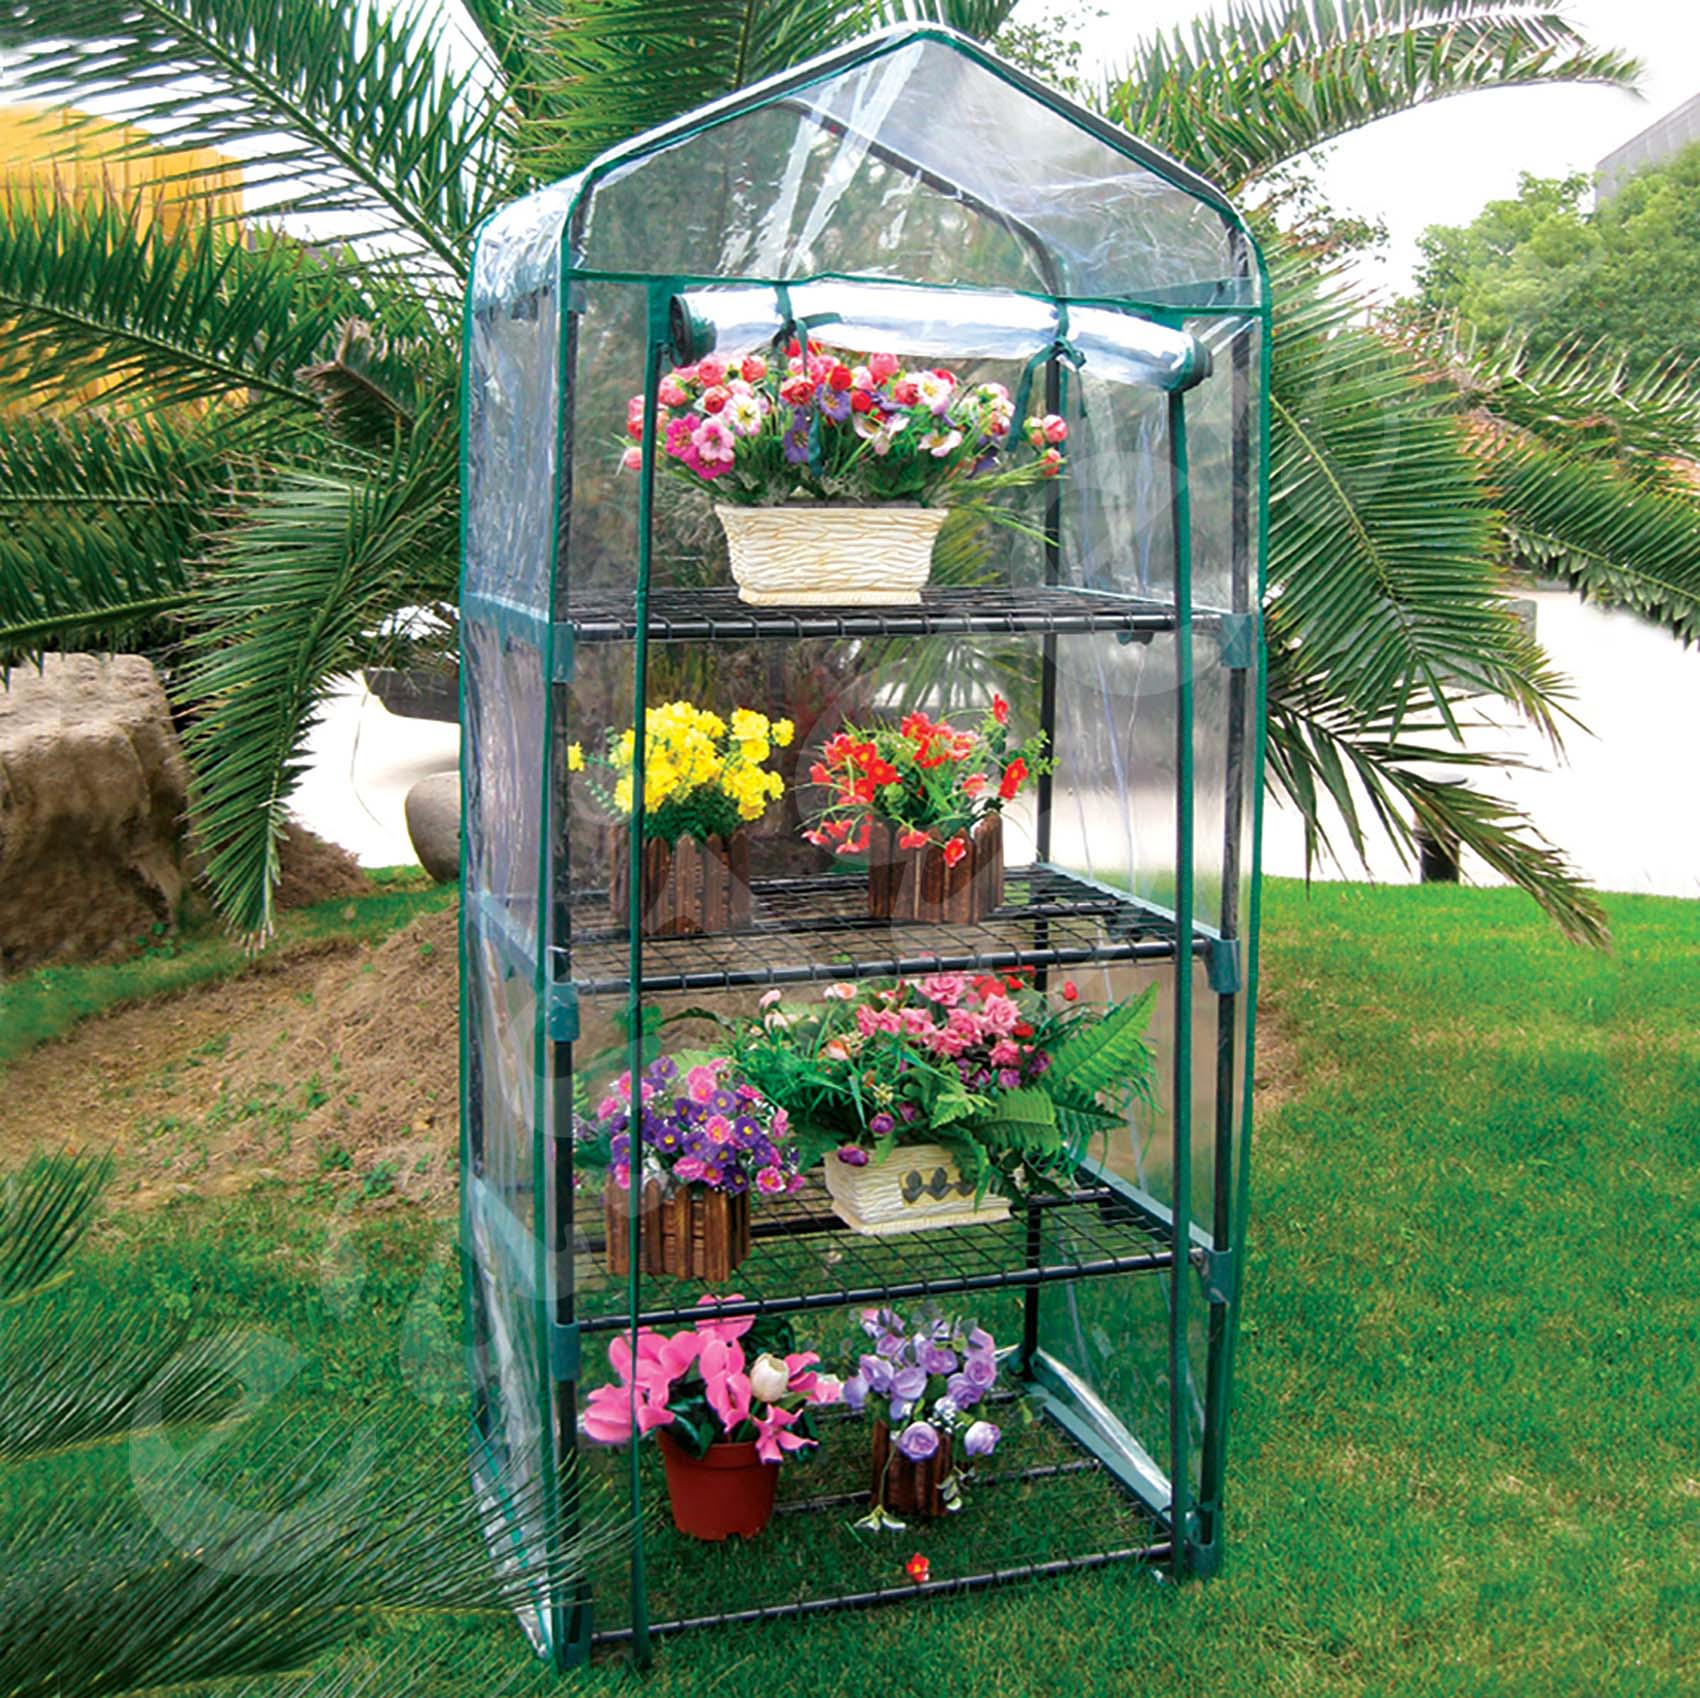 ACJRYO 4-Tier Mini Greenhouse Durable PVC Cover Garden Greenhouse with Roll-Up Zipper Door for Garden Yard Patio Indoor Outdoor Plants Cover ONLY 